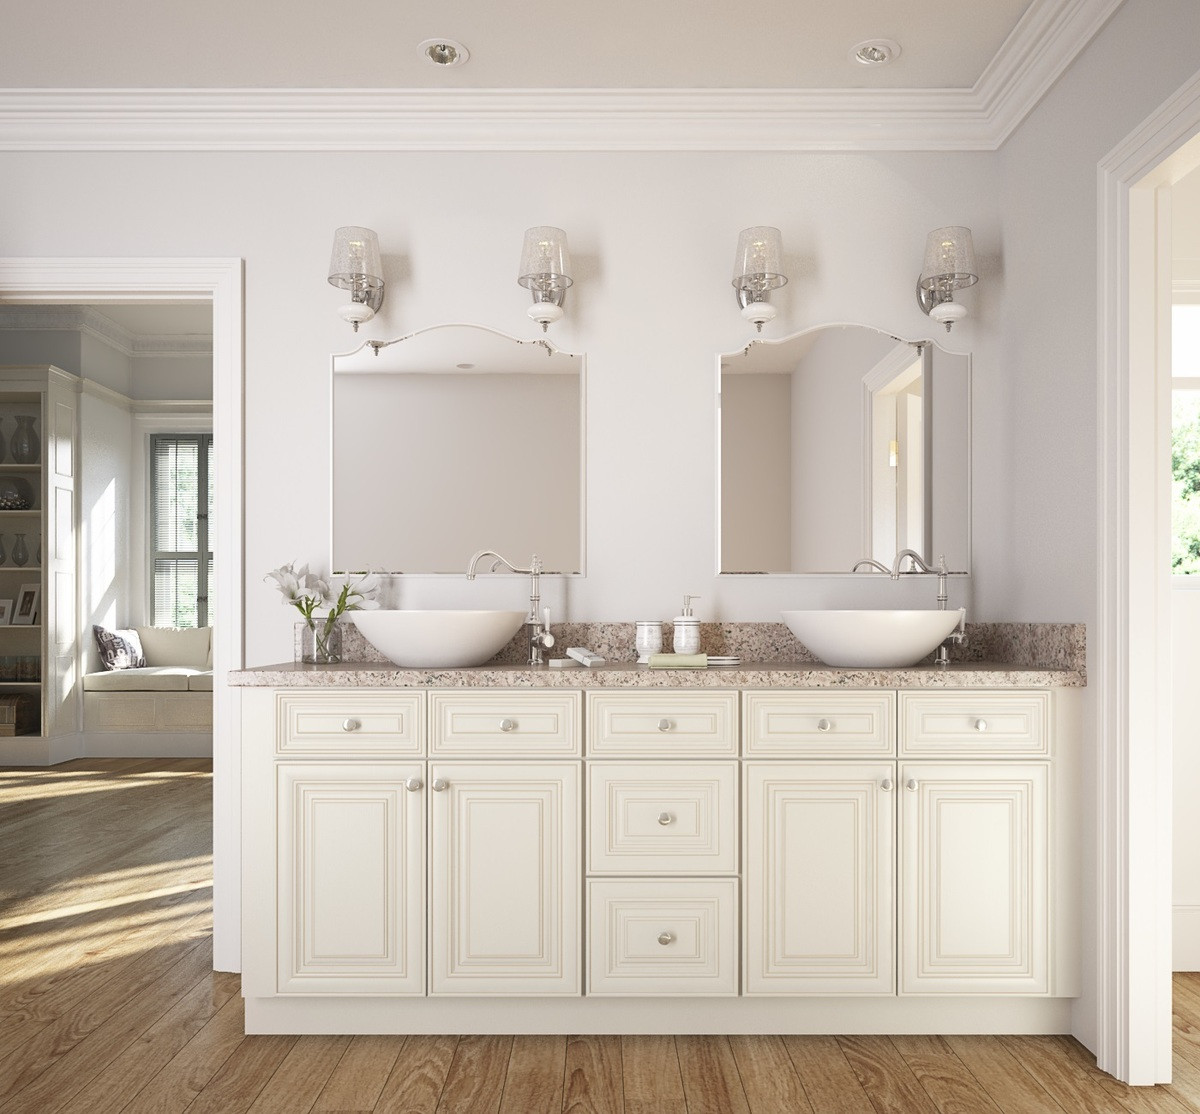 Cabinets To Go Bathroom Vanities
 Brantley Antique White Glaze Ready to Assemble Bathroom